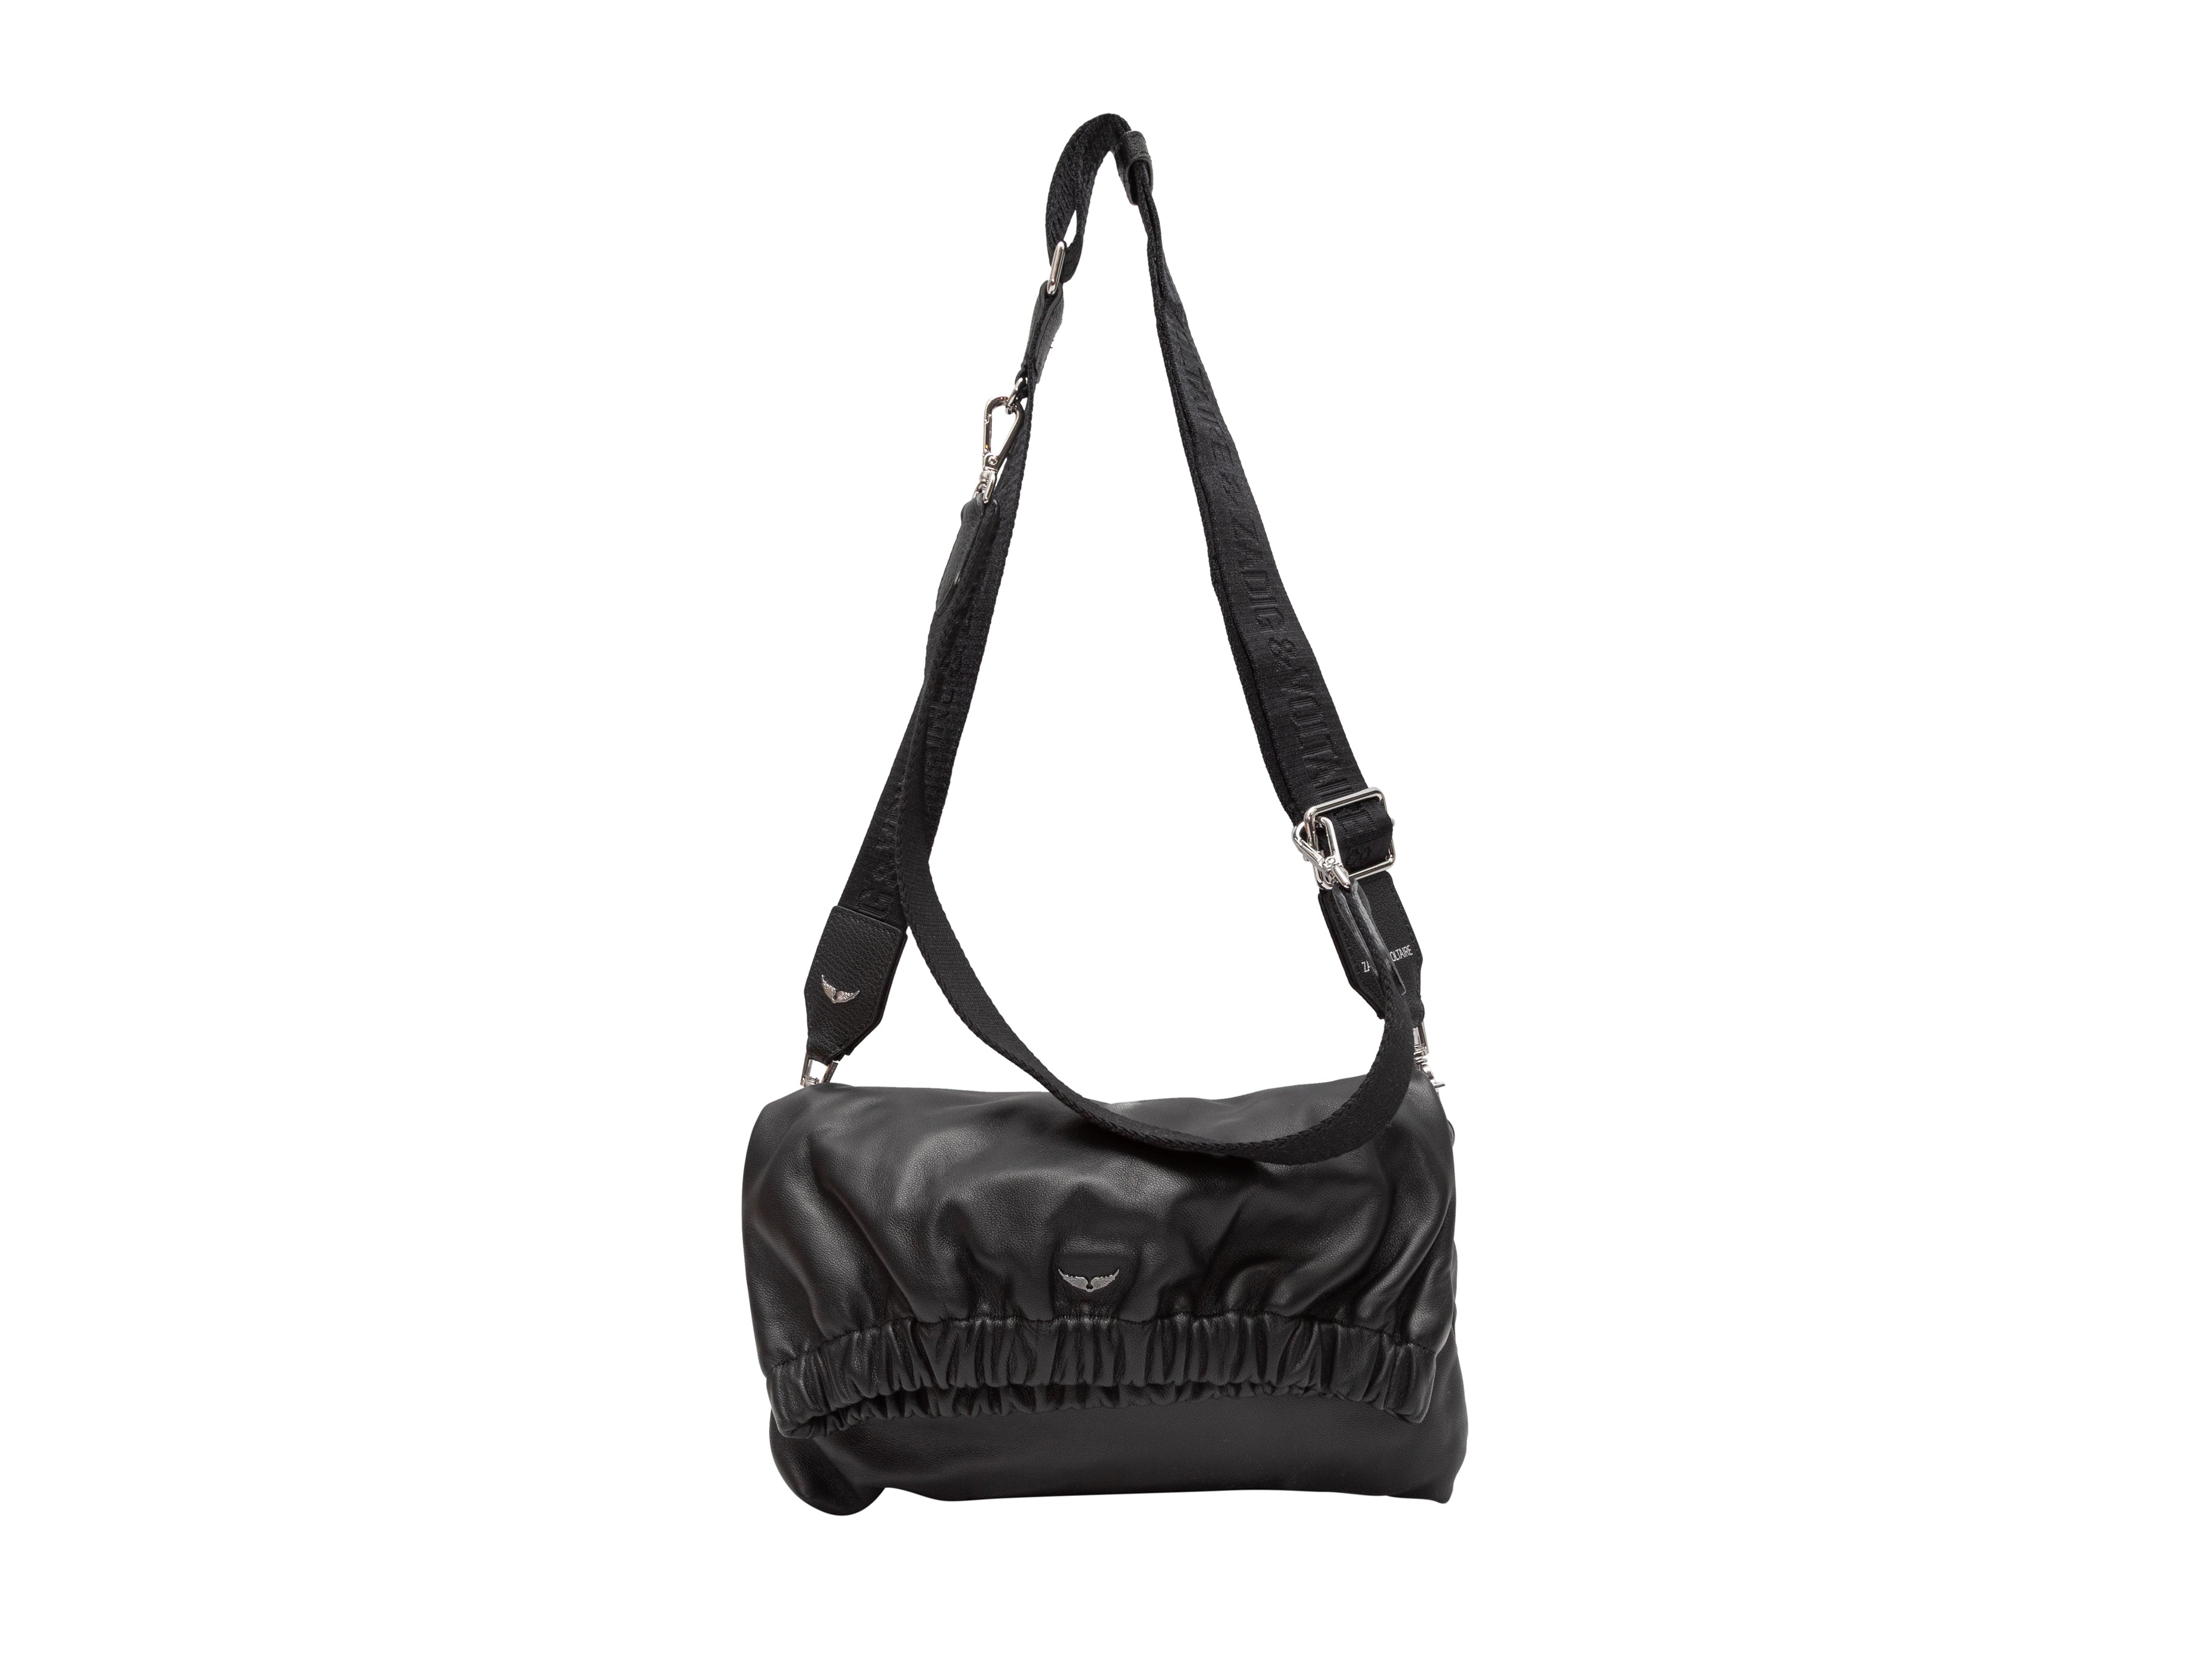 Zadig & Voltaire Authenticated Rock Leather Handbag